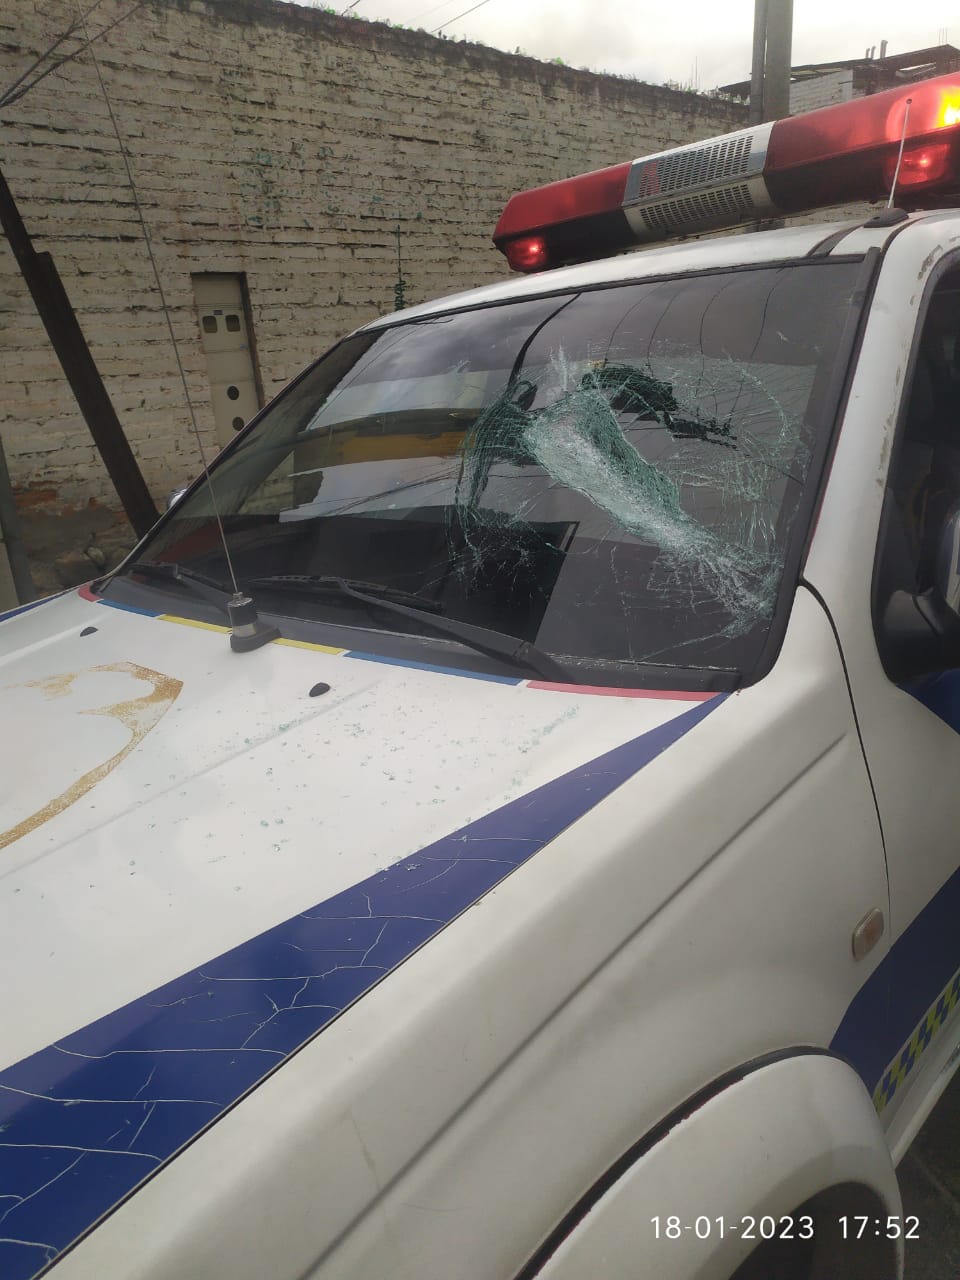 Vendedor informal destrozó parabrisas de carro municipal en Loja